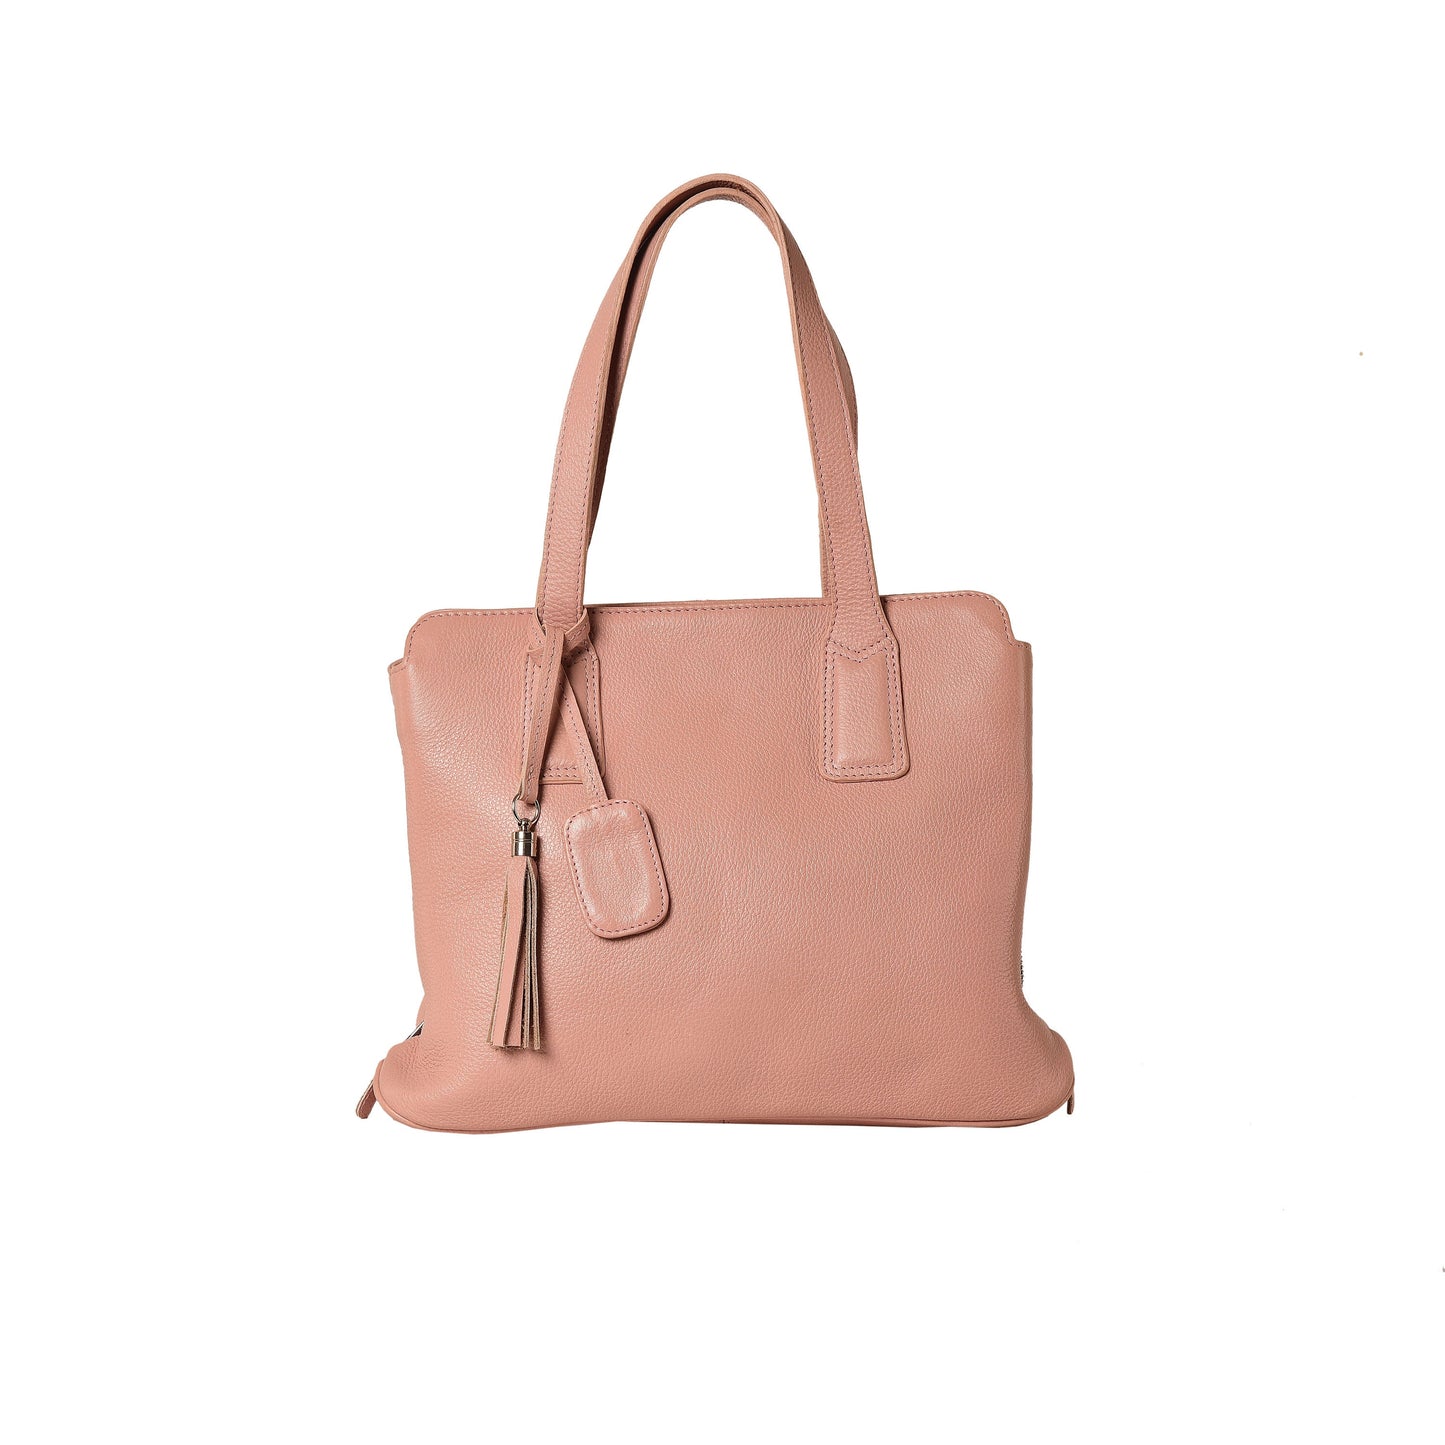 Baby Pink Leather Handbag for Women's Party Handbag Long Handle Bag for Women Gift for Her Everyday Handbag Satchel Bag